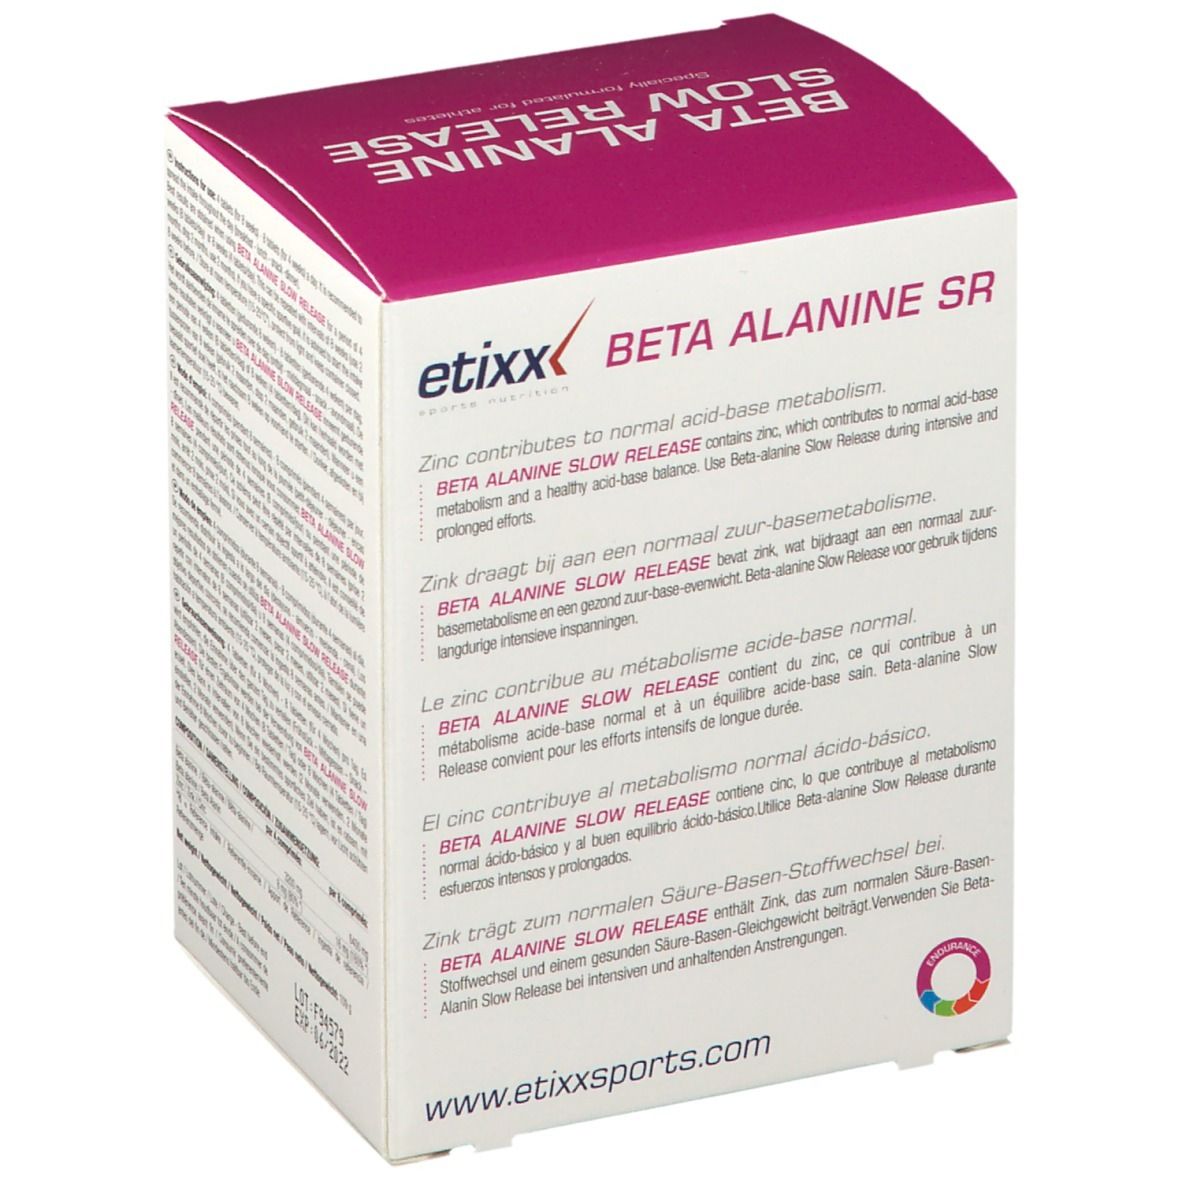 Etixx Beta Alanine Slow Release